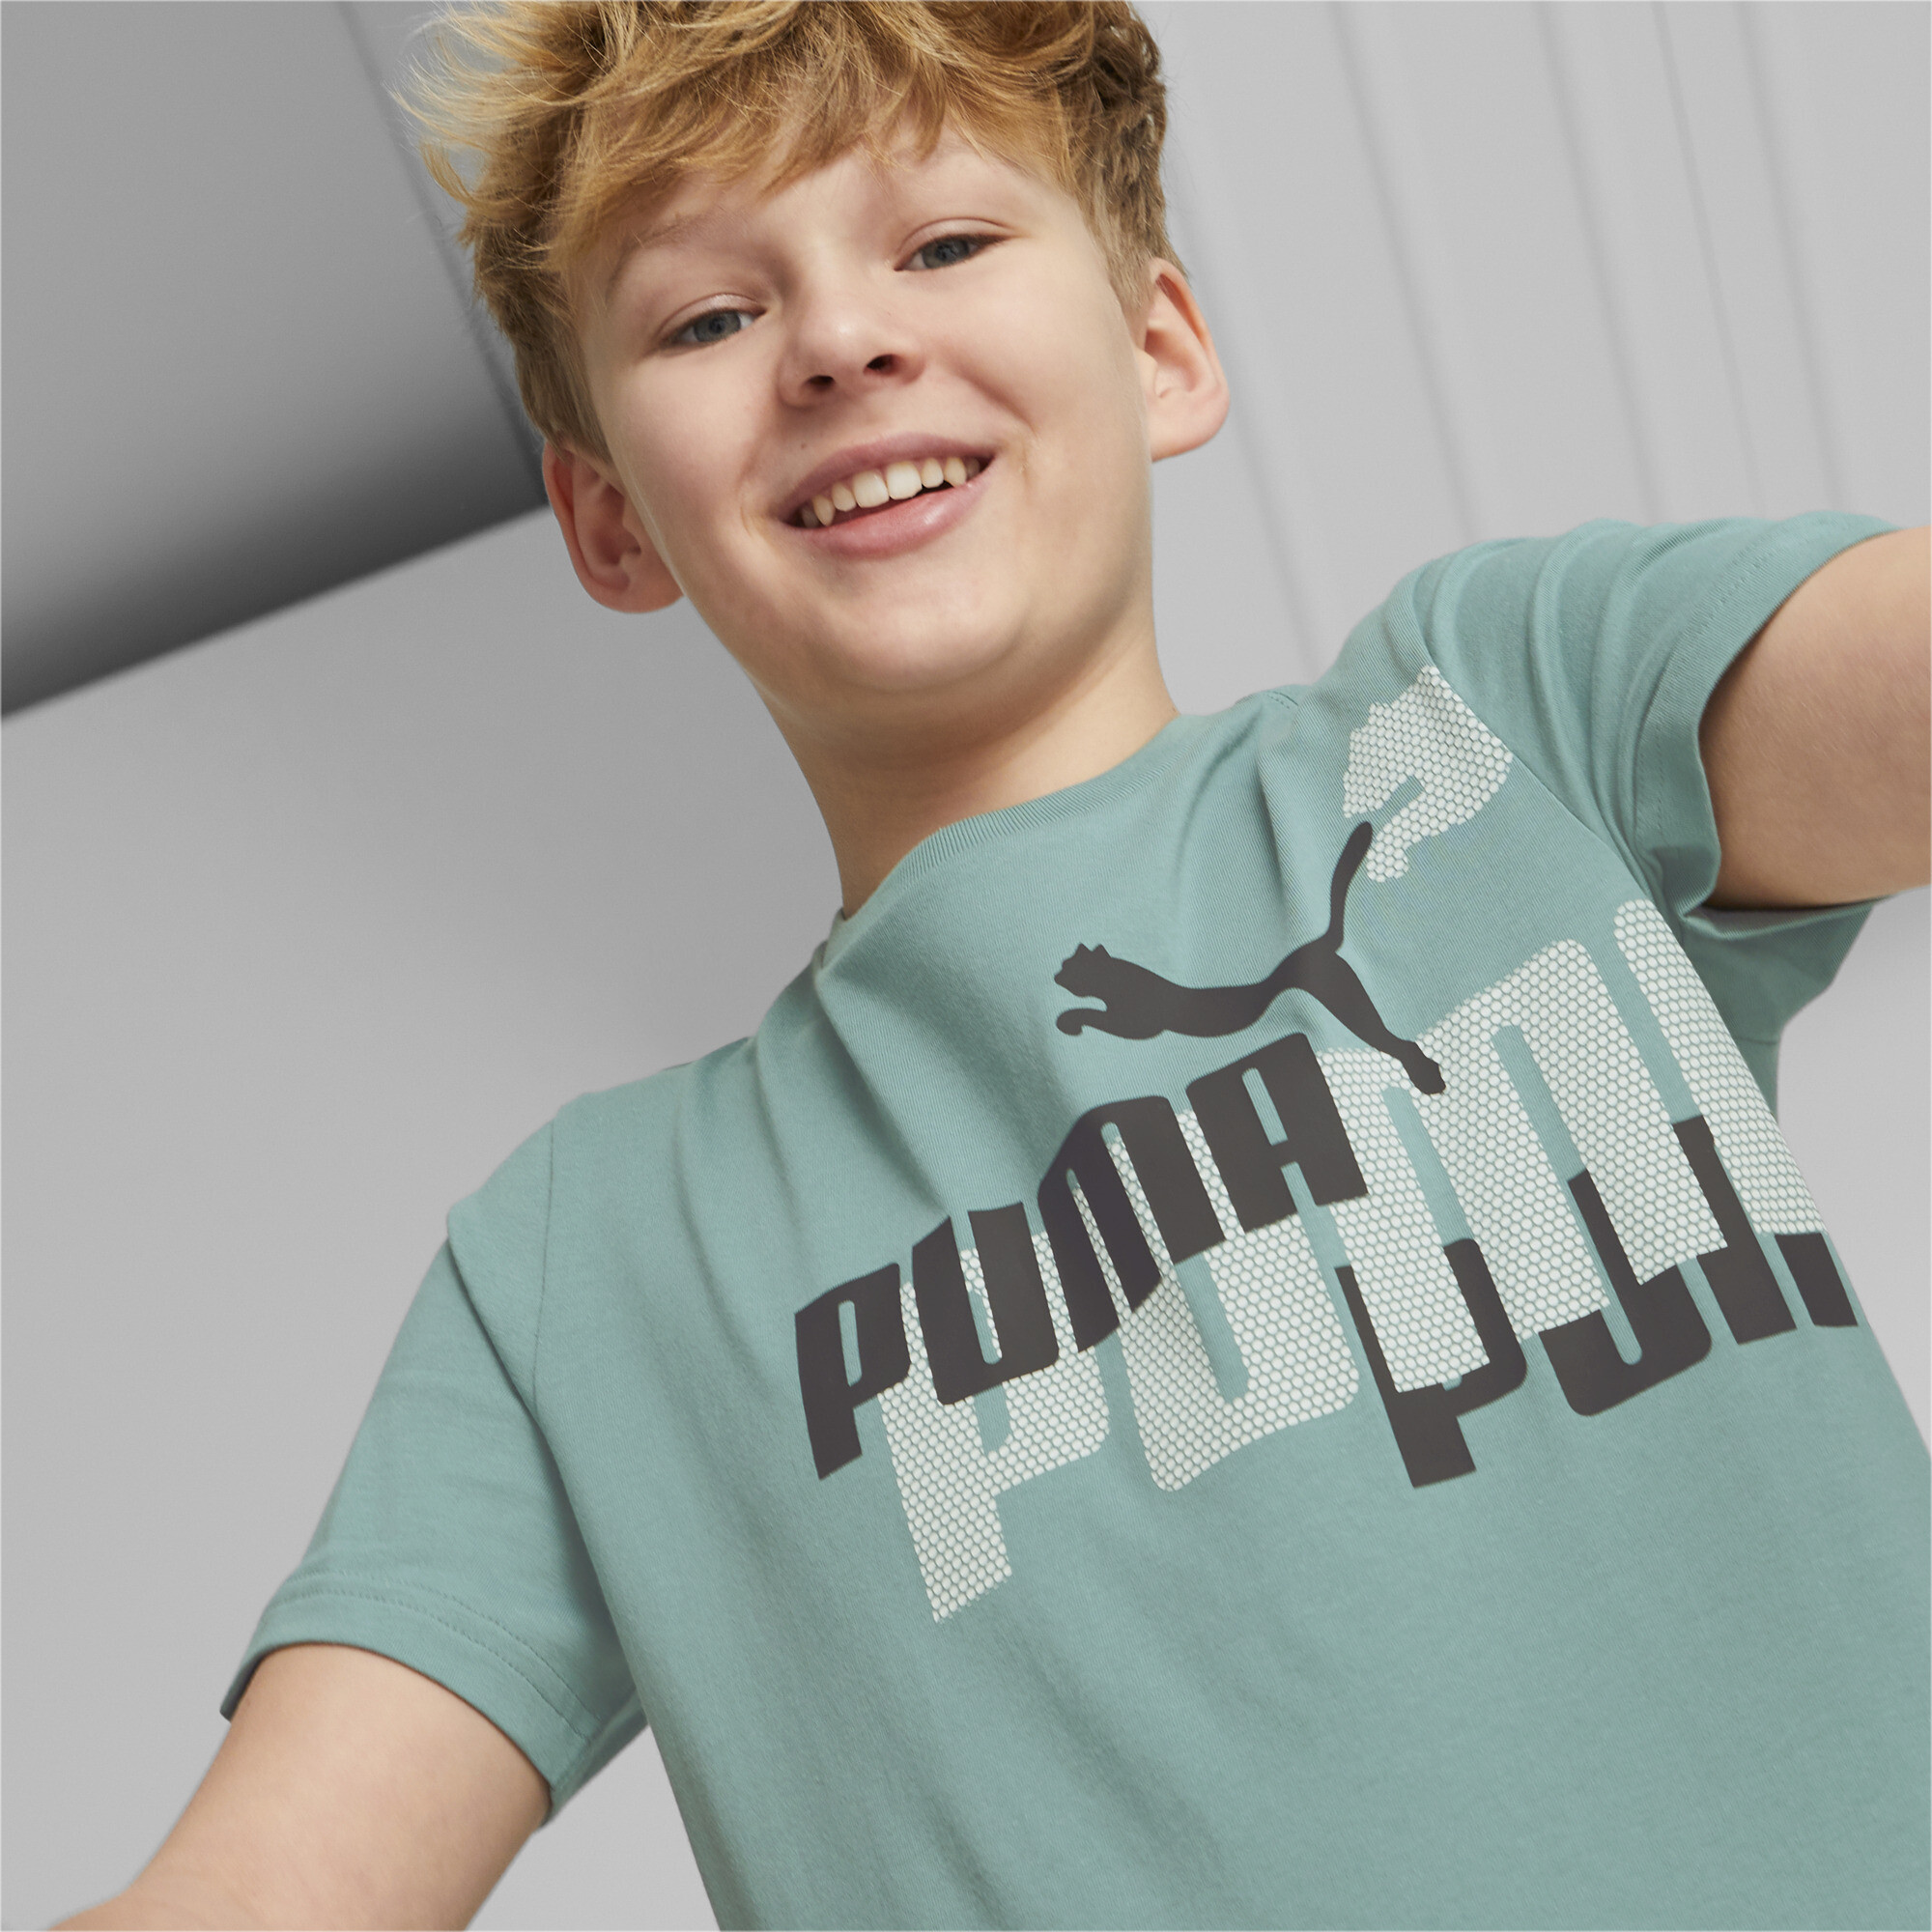 PUMA ESS+ LOGO POWER T-Shirt In Gray, Size 5-6 Youth